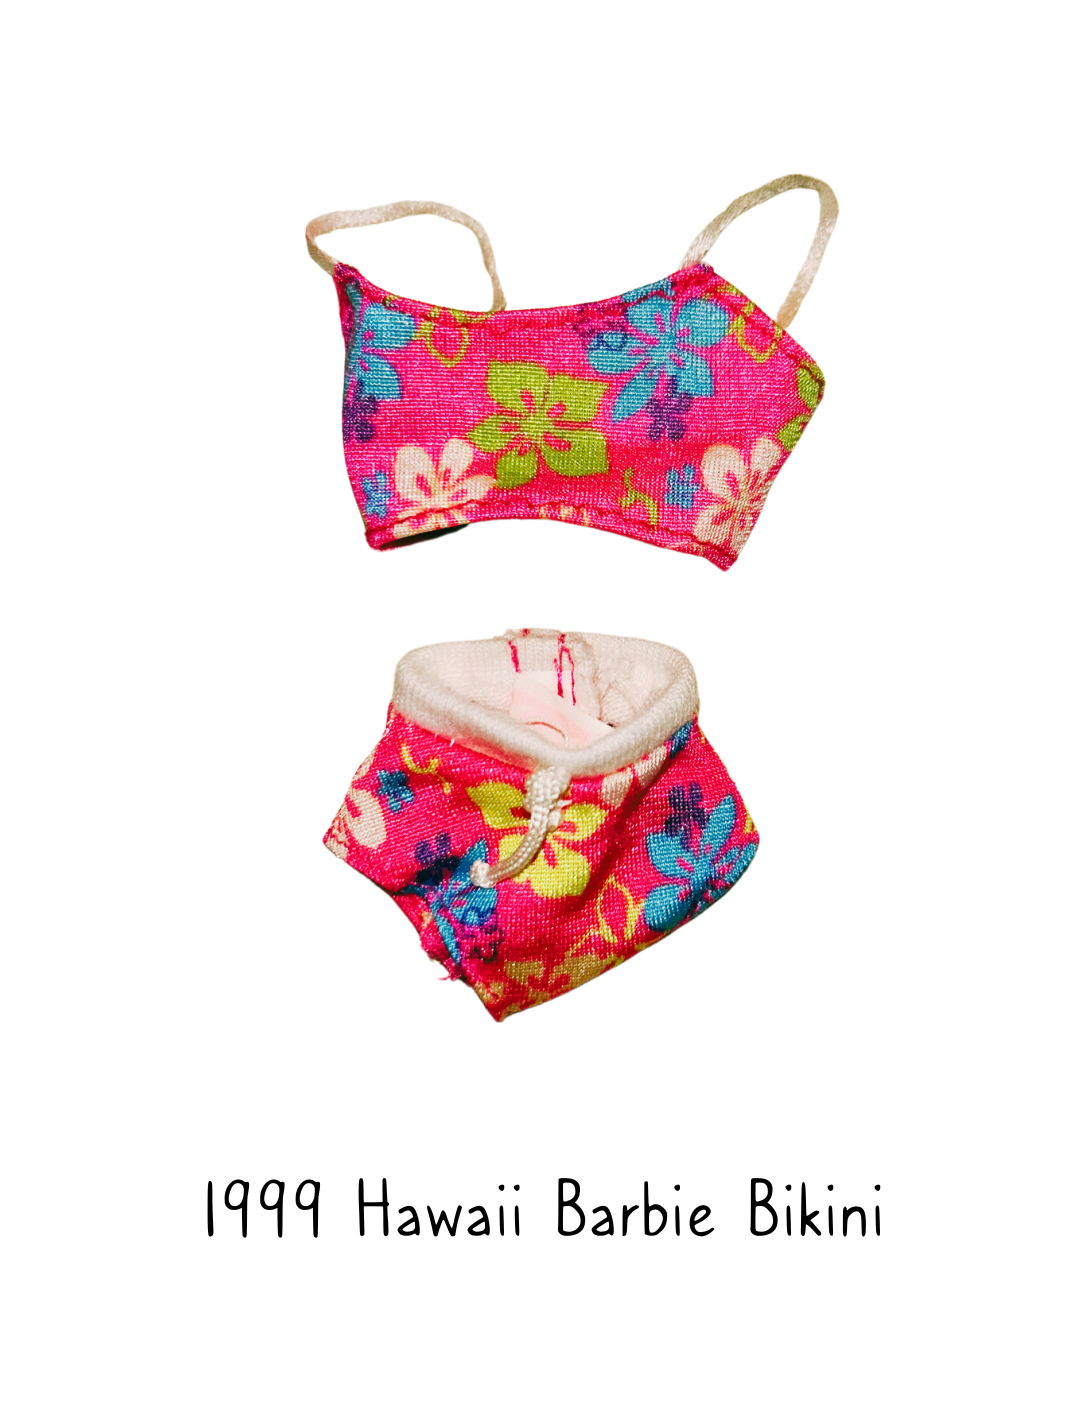 1999 Hawaii Barbie Bikini